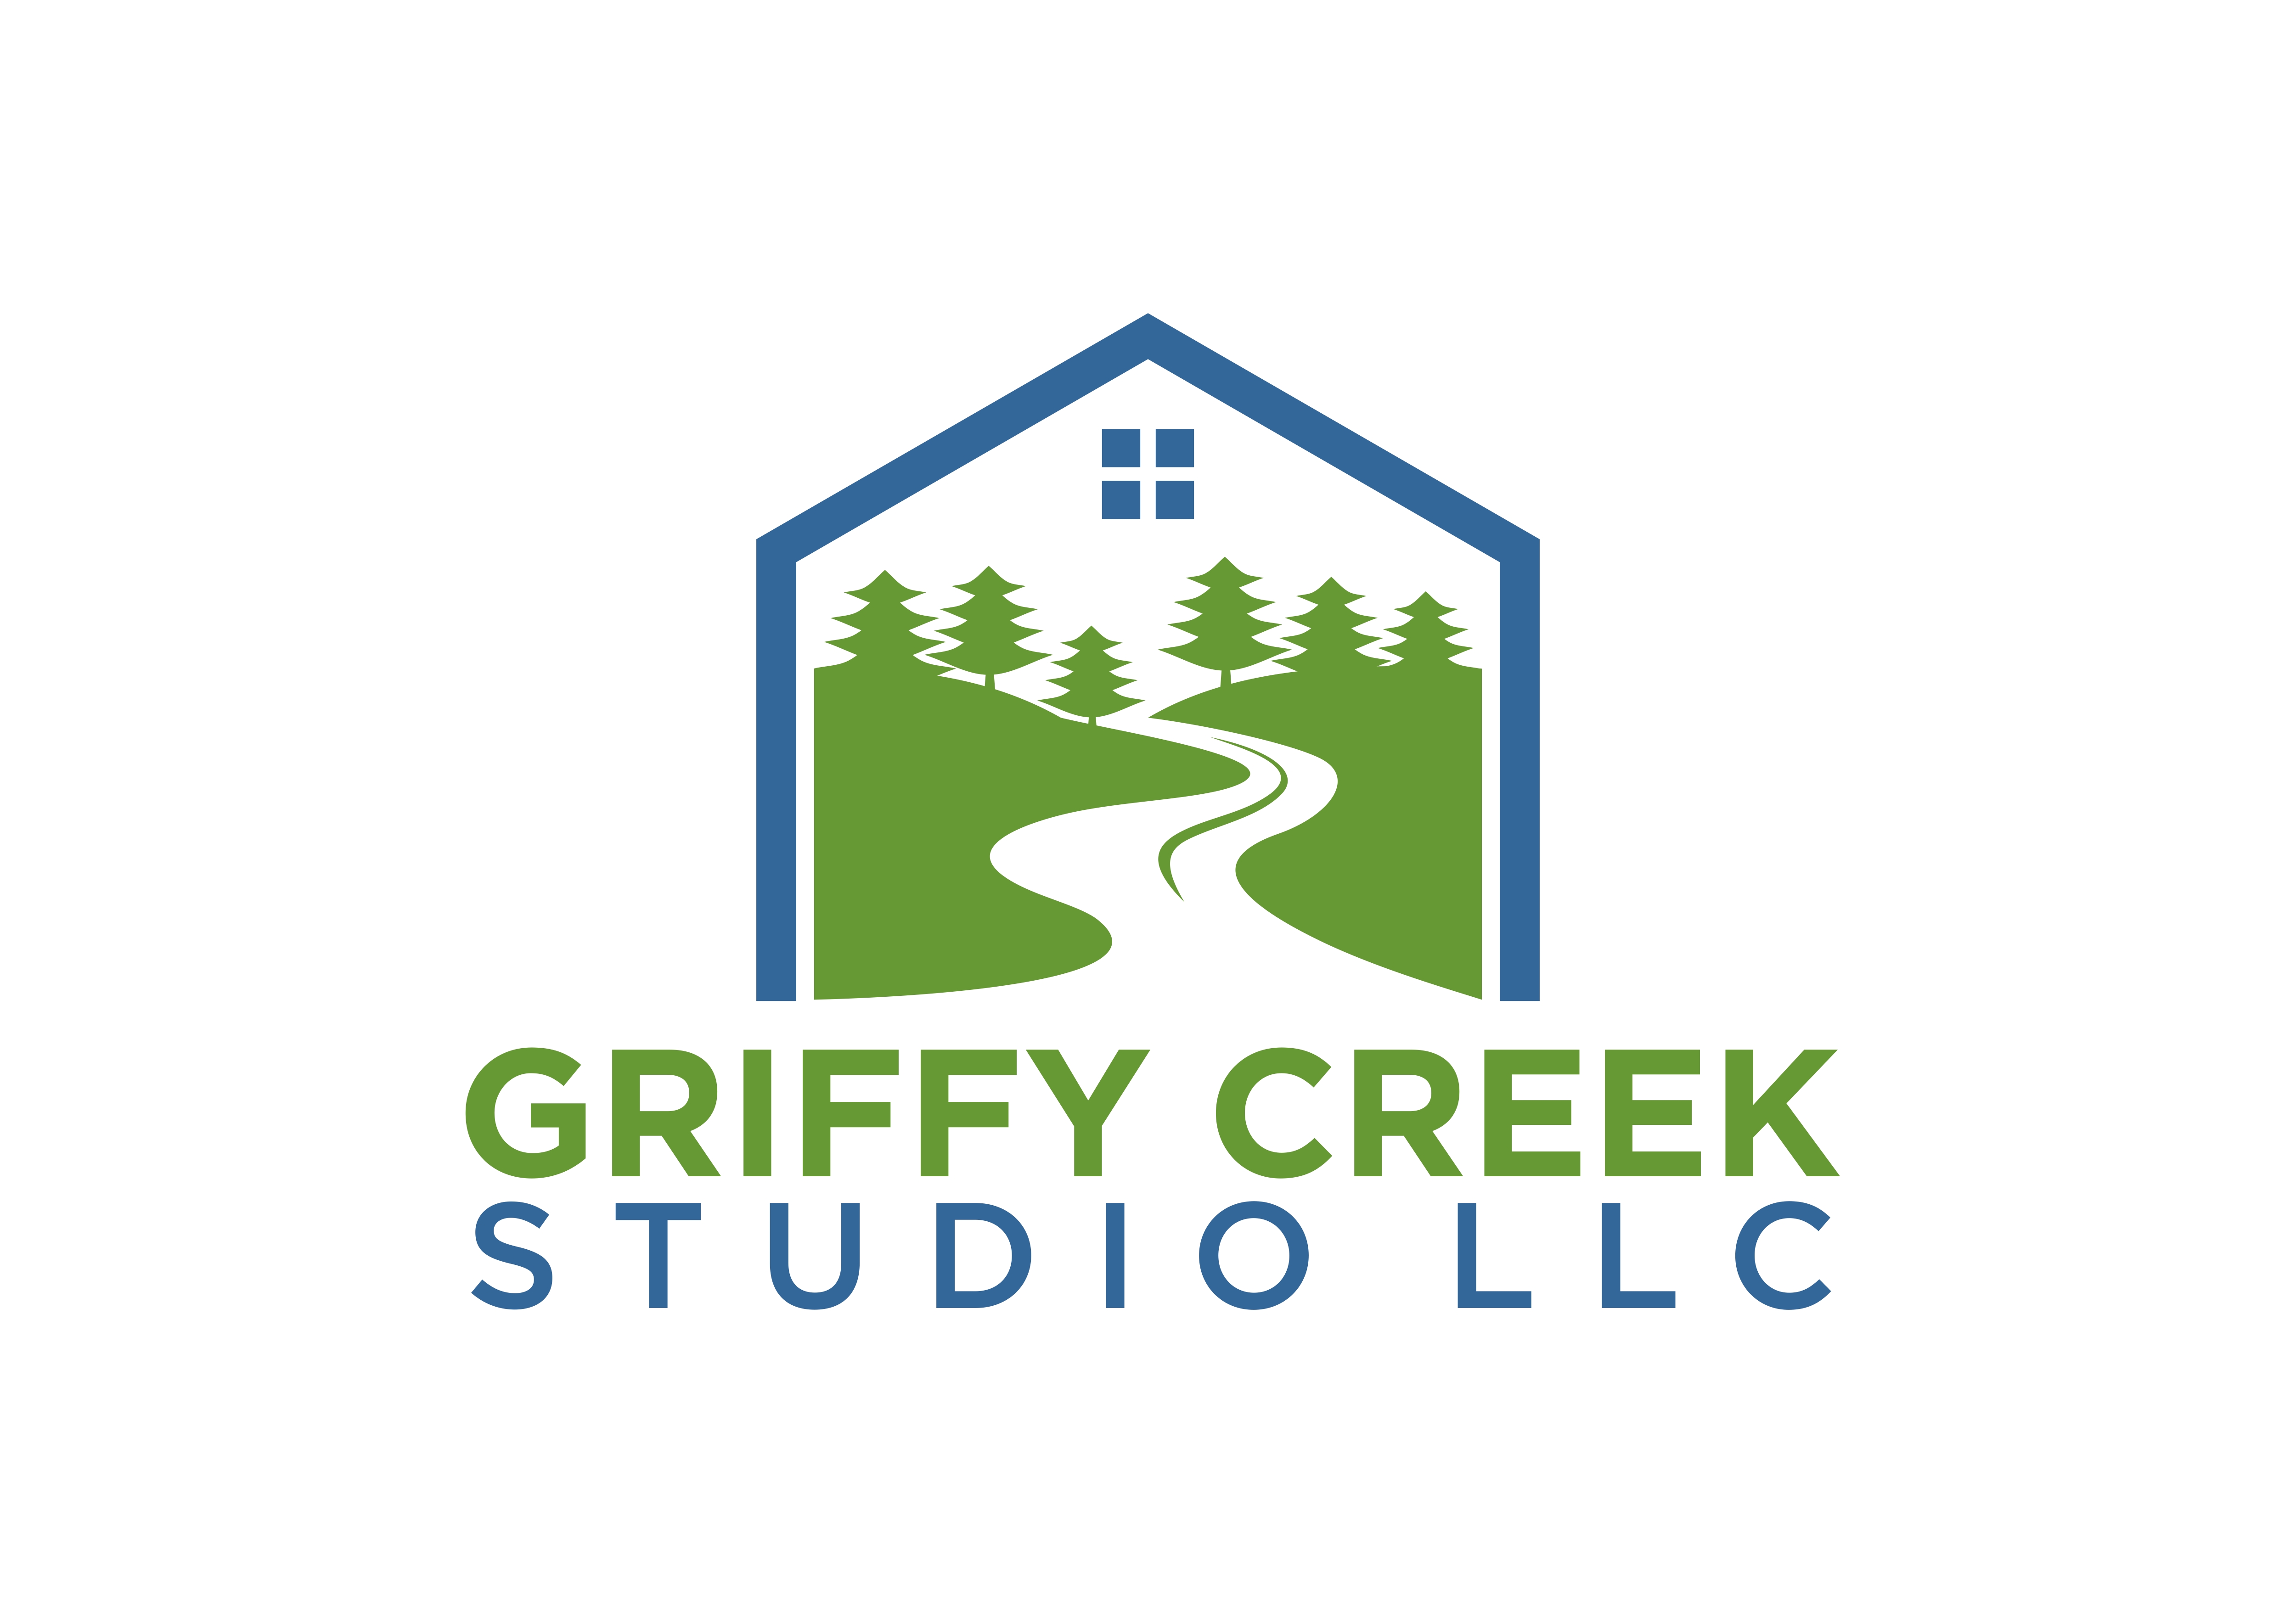 Griffy Creek Studio LLC company logo